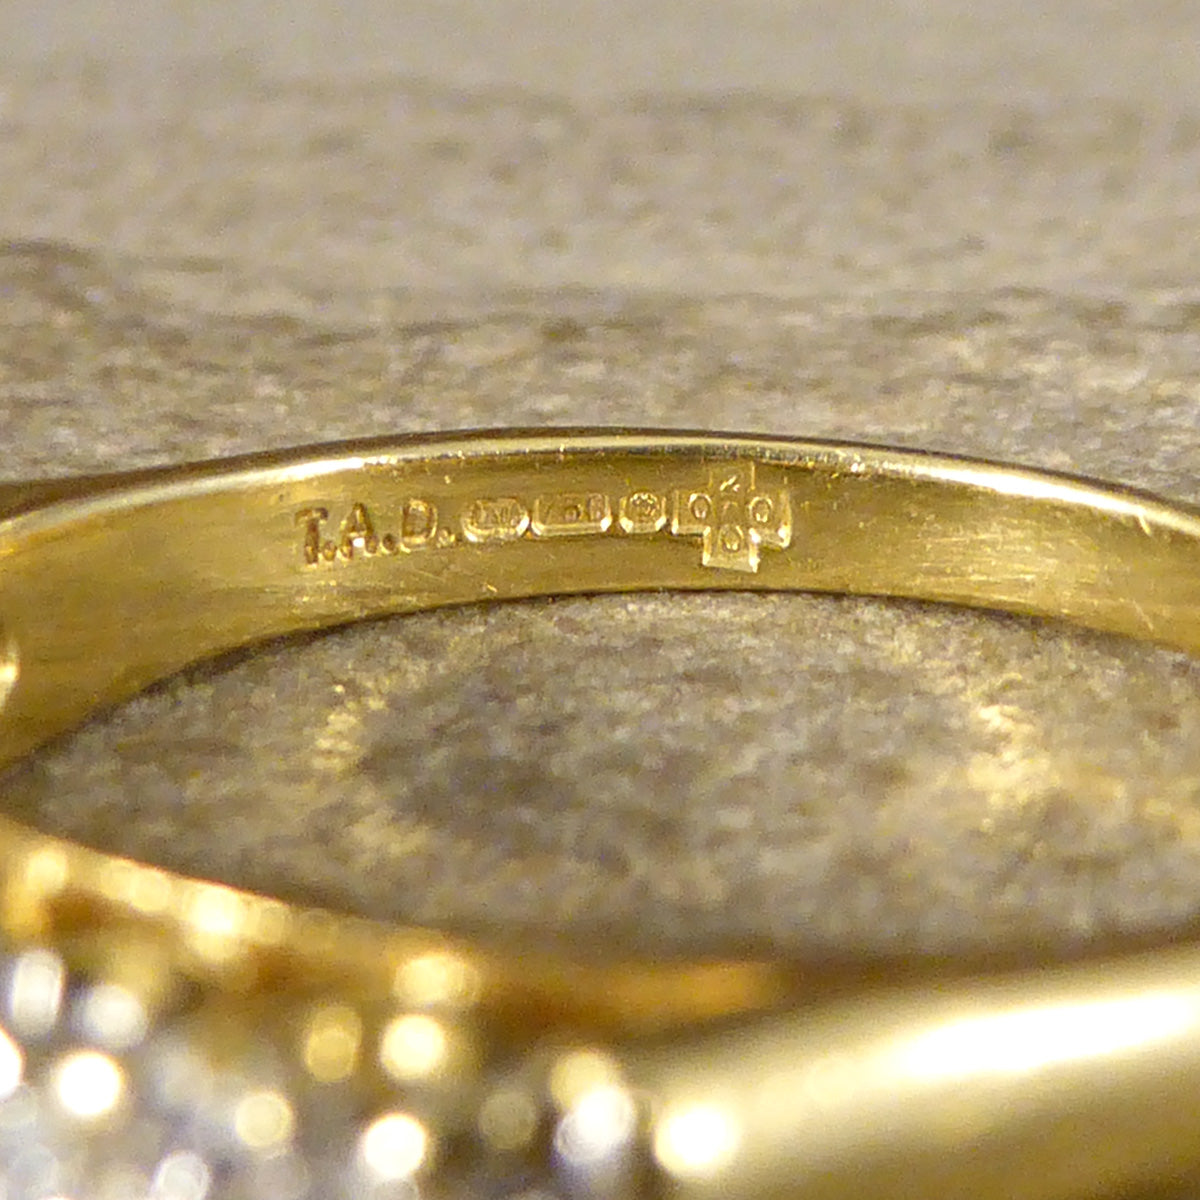 Brilliant Cut Seven Stone Diamond Millennium Ring in 18ct Yellow Gold